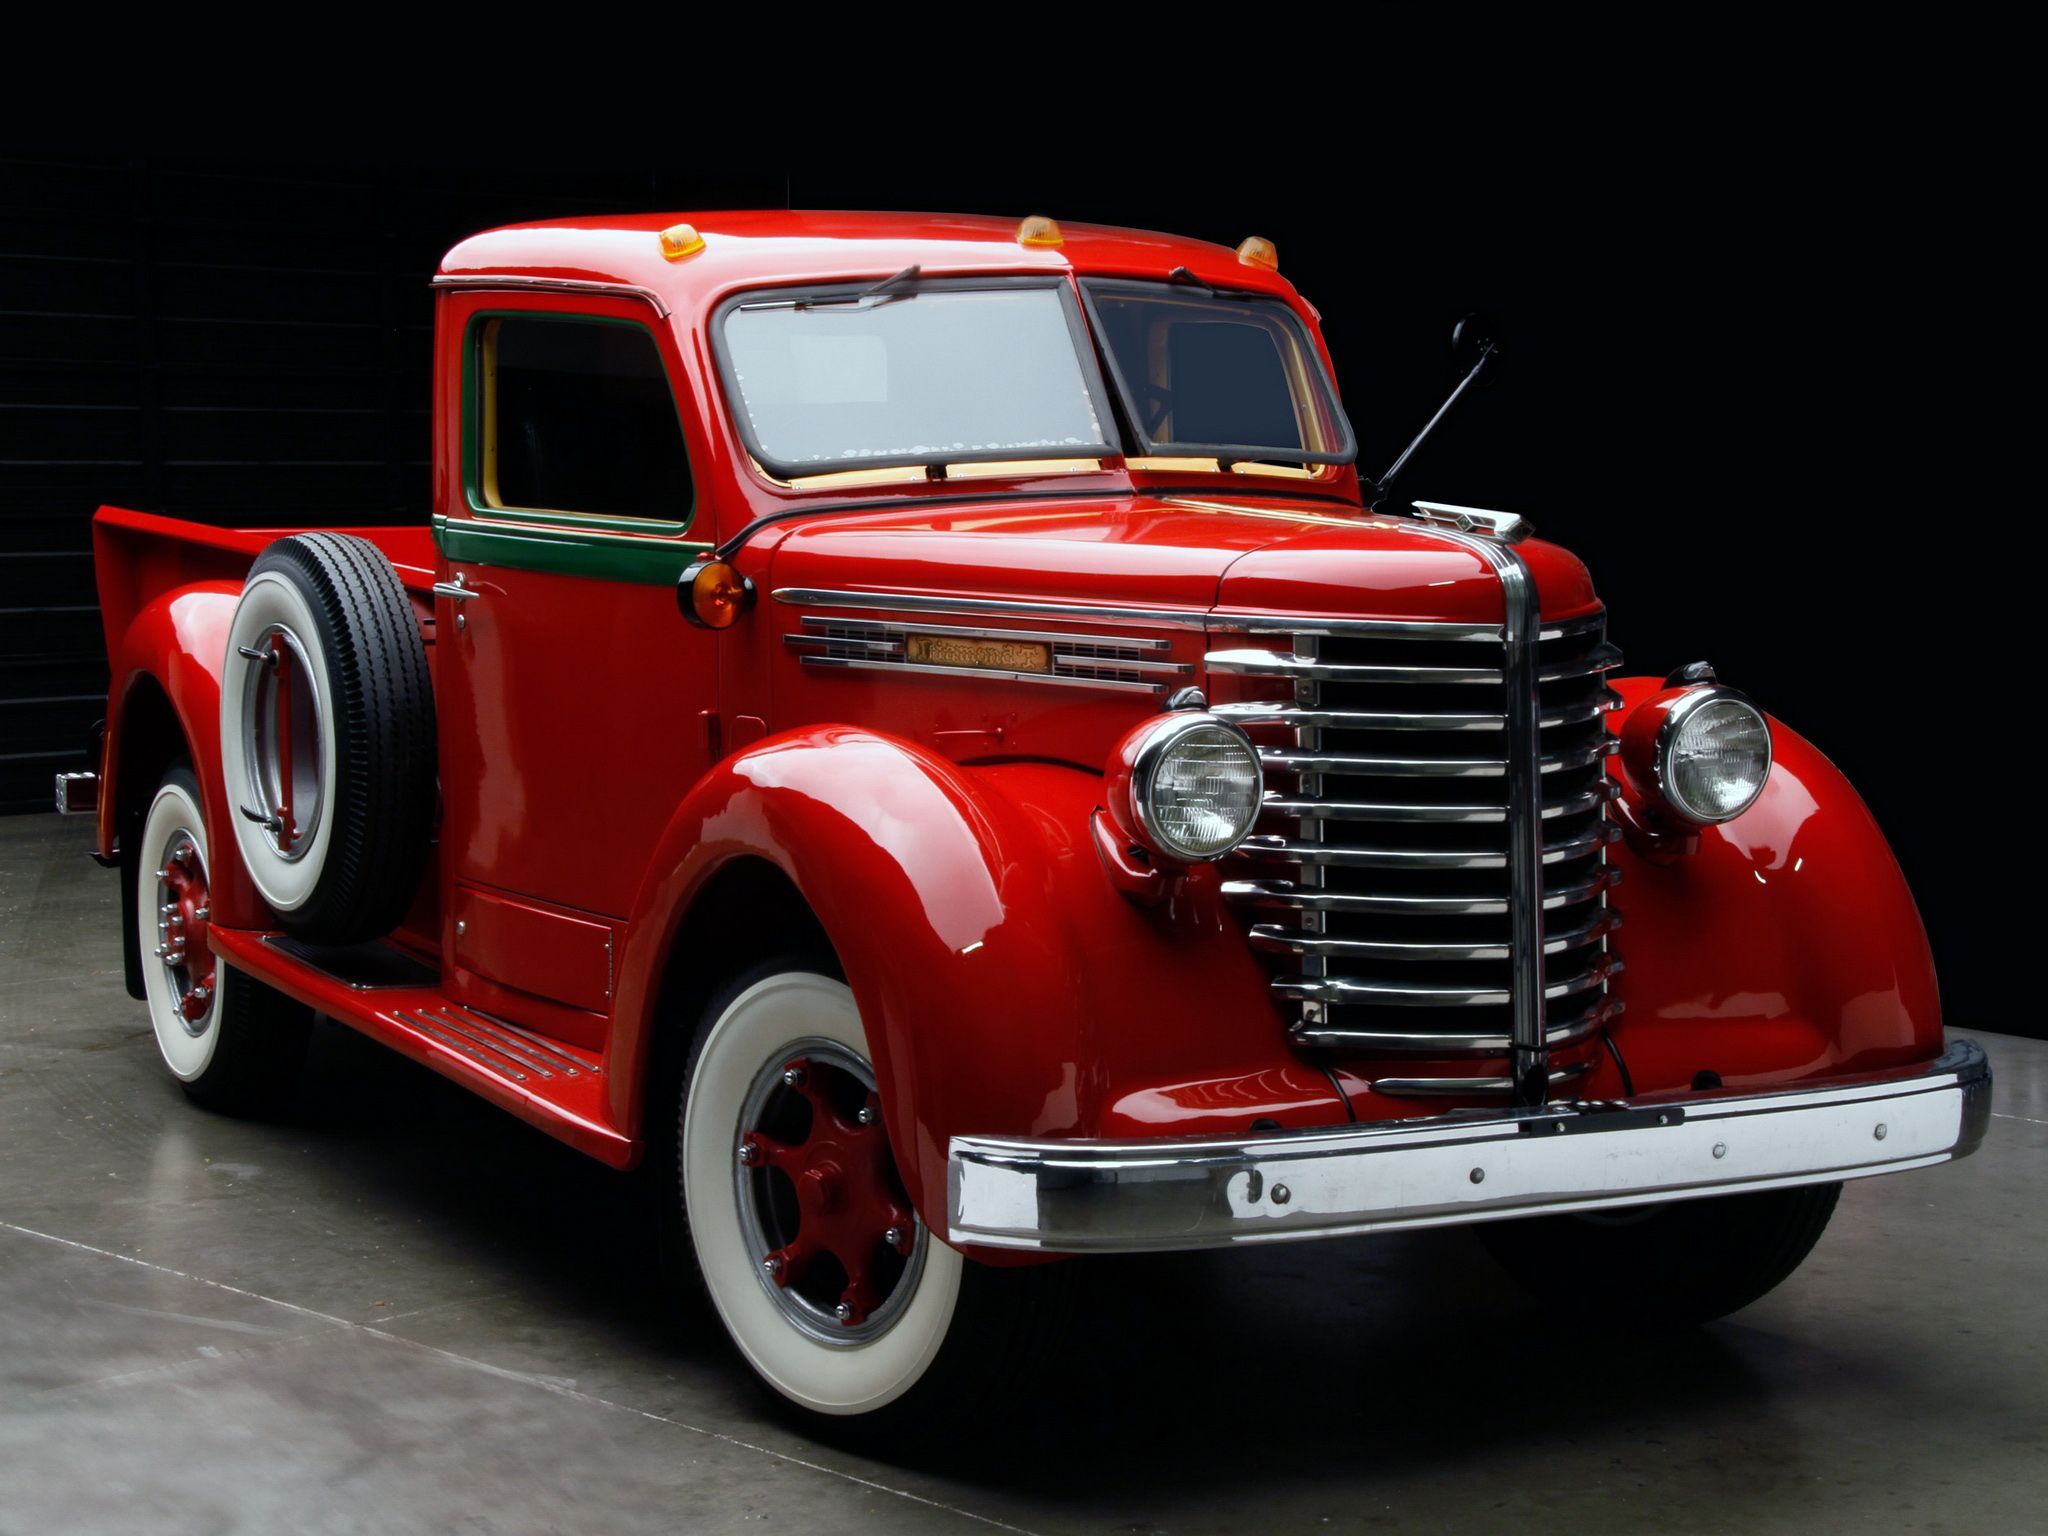 1949 Diamond T 201 Pickup – This is